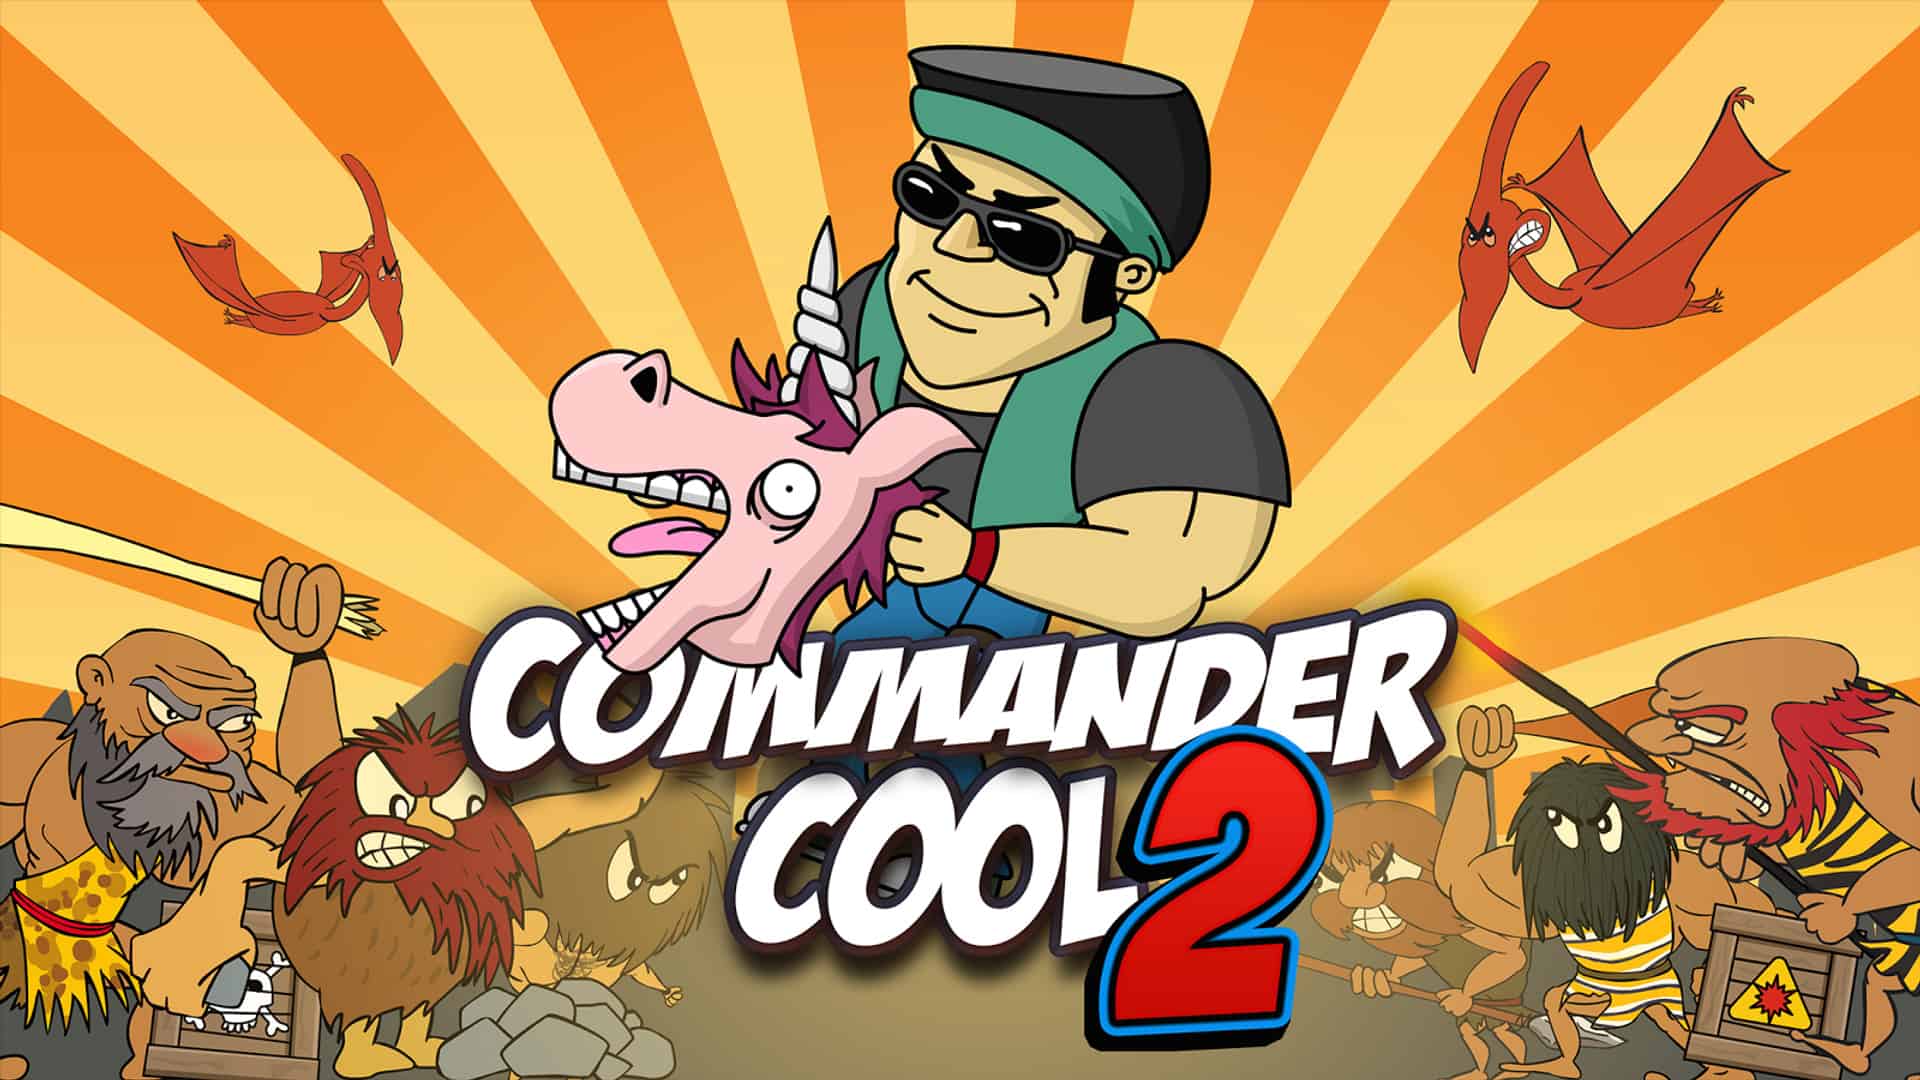 Commander Cool 2